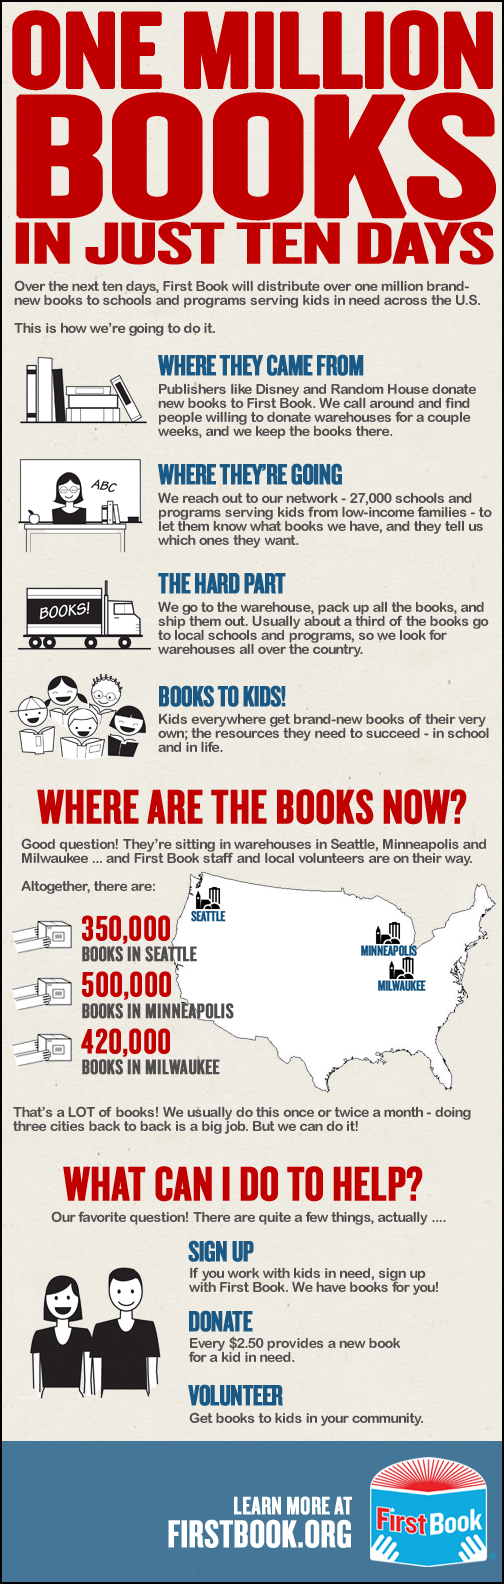 One Million Books in Just Ten Days